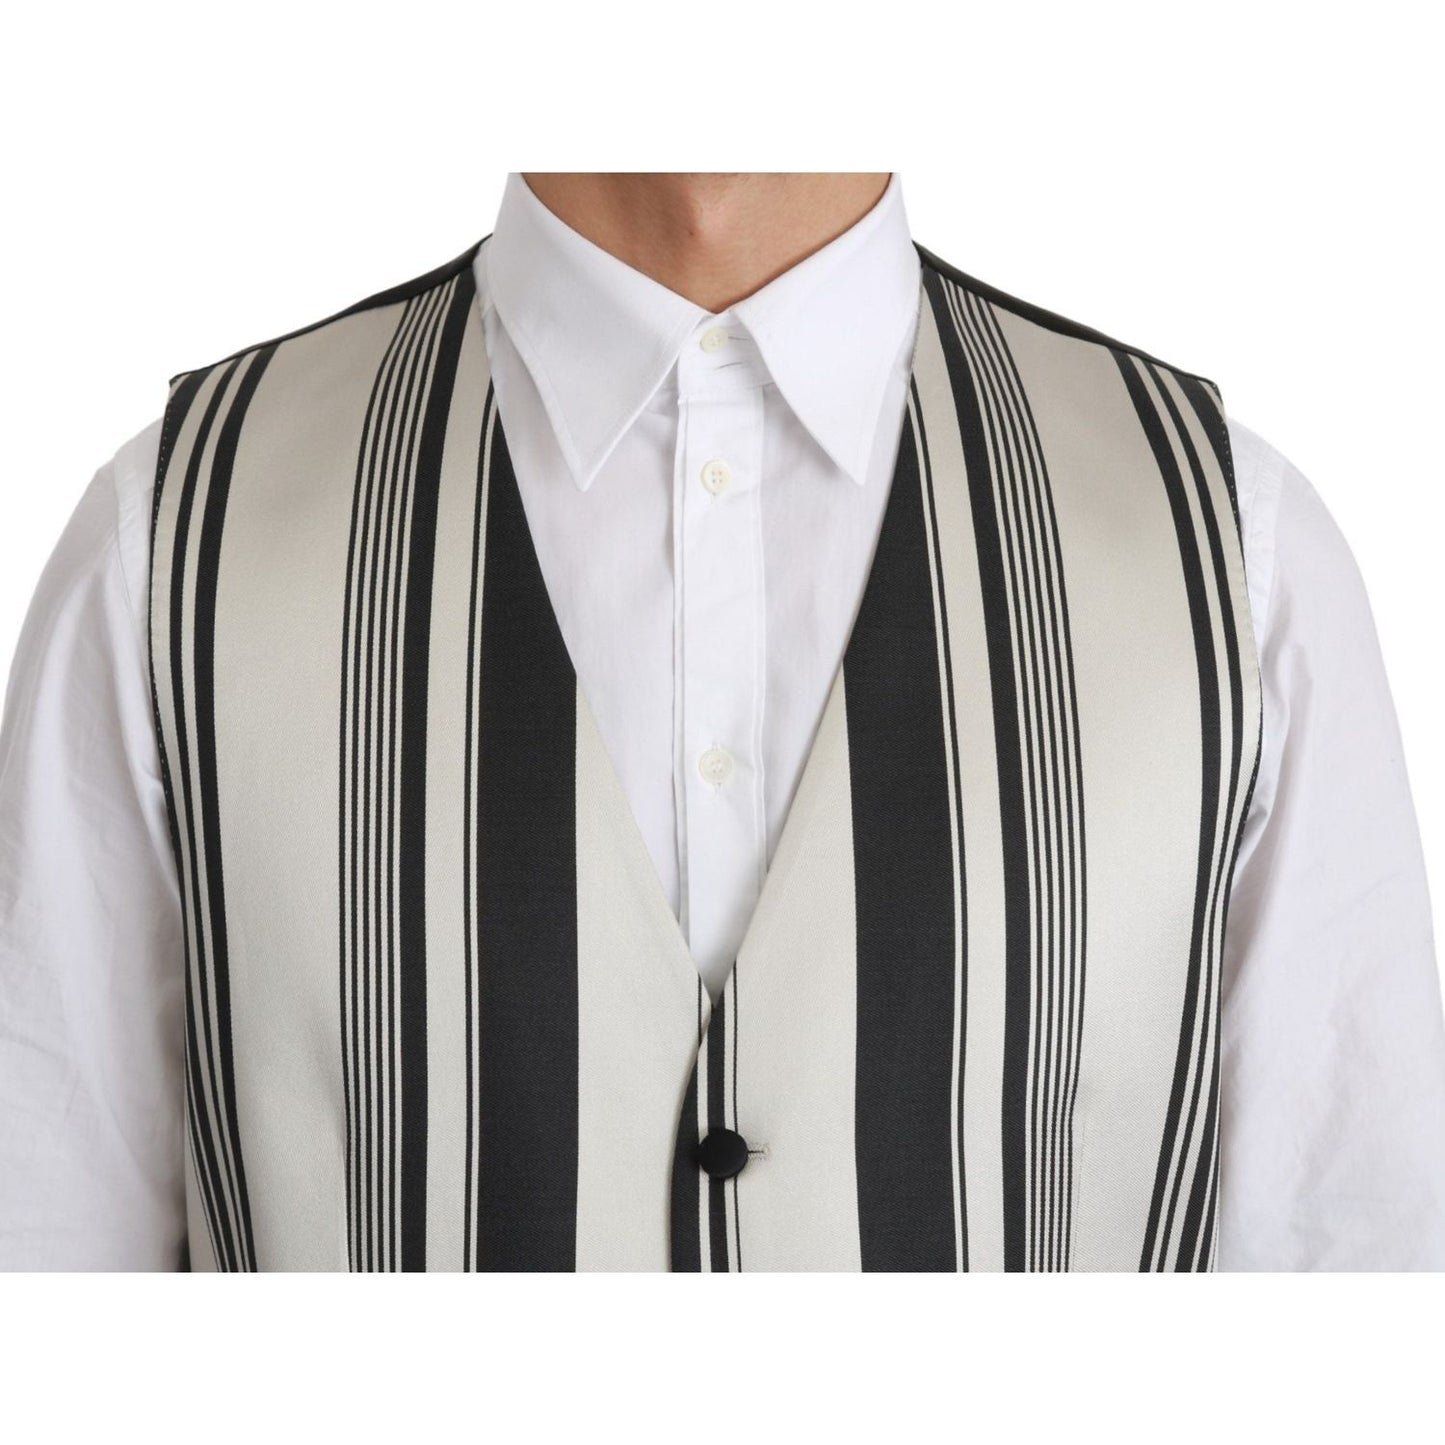 Dolce & Gabbana Stripe Cotton Silk Dress Vest white-black-stripes-waistcoat-formal-vest IMG_0344-9fade29b-c82.jpg